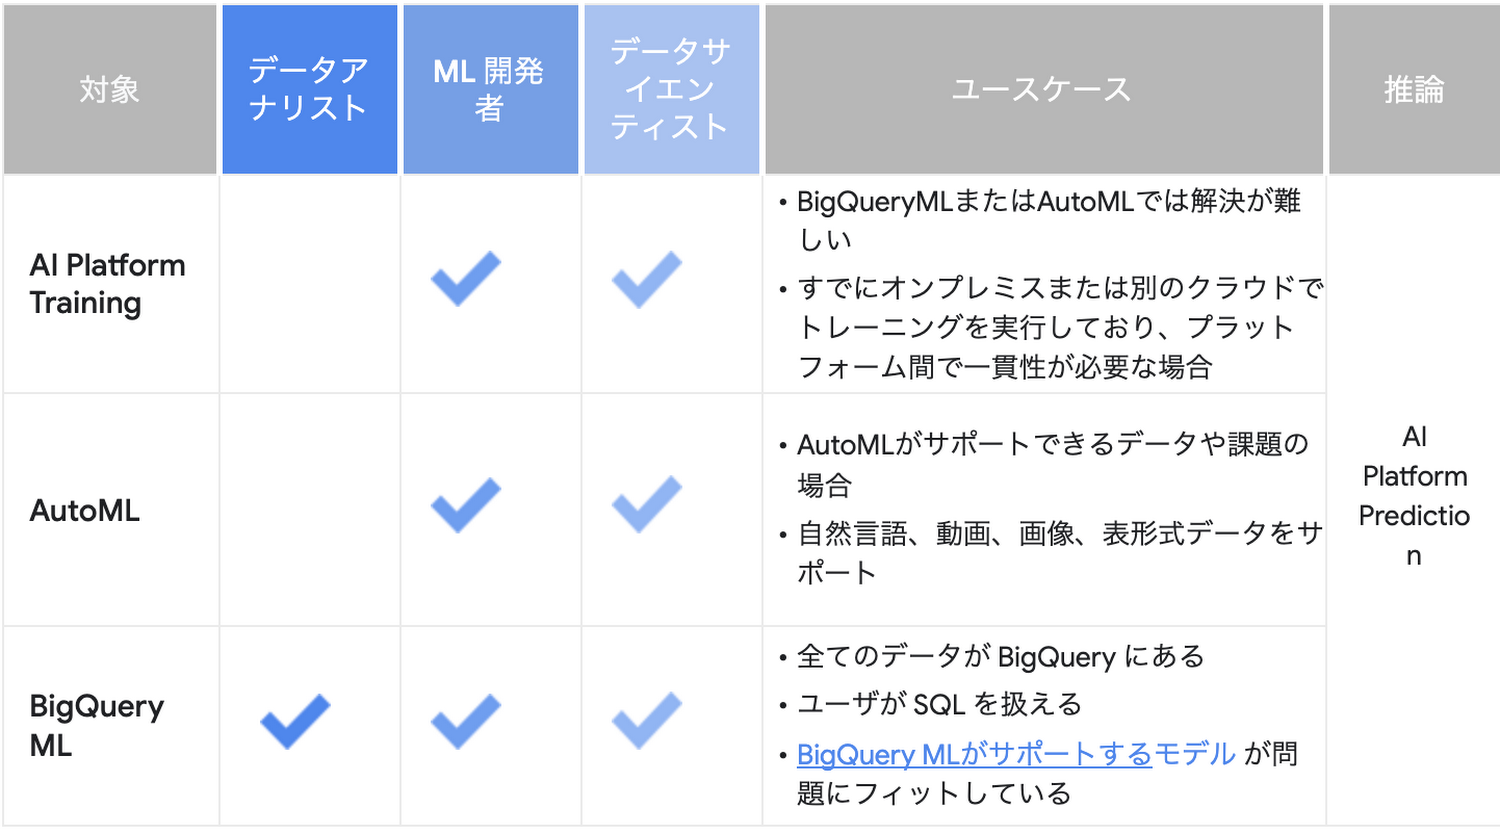 https://storage.googleapis.com/gweb-cloudblog-publish/images/sukurinshiyotsuto_2021-02-18_13.34.12.max-1500x1500.png